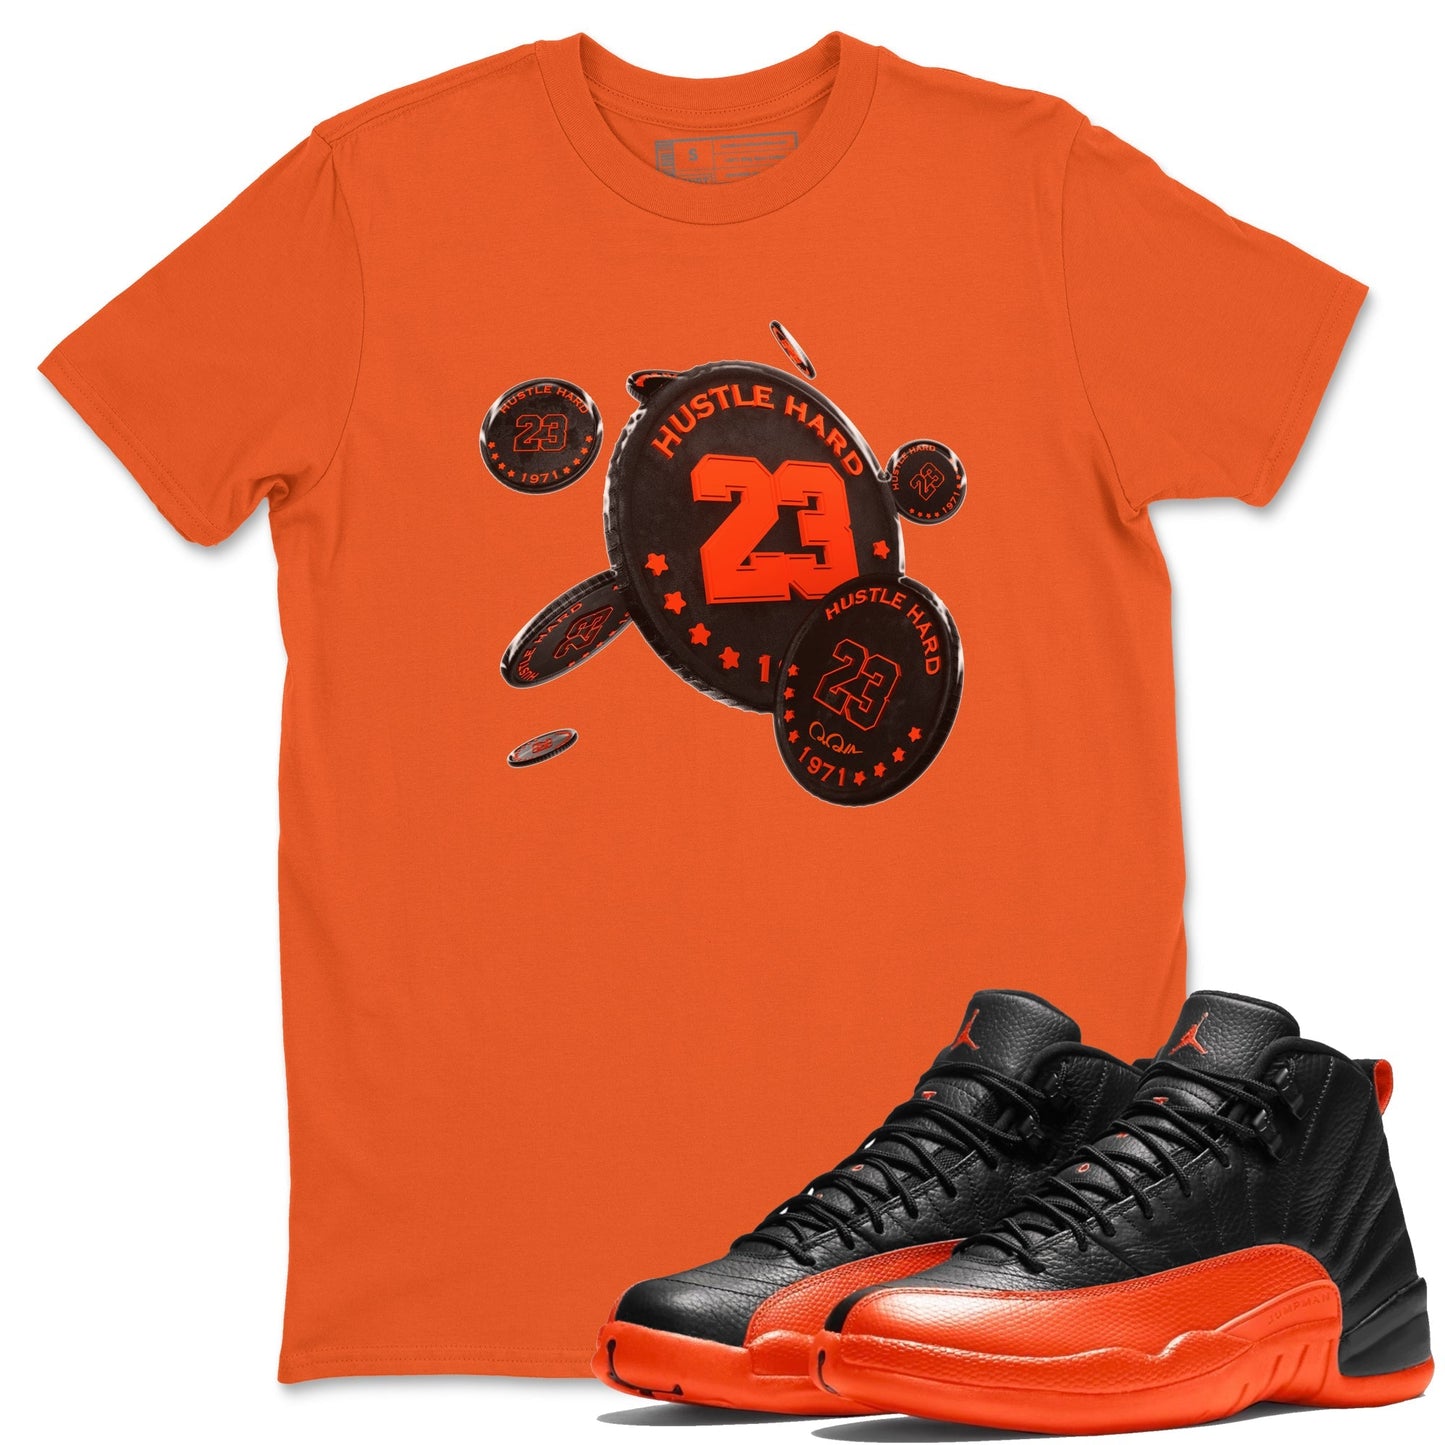 Air Jordan 12 Brilliant Orange Sneaker Match Tees Coin Drop Sneaker Tees AJ12 Brilliant Orange Sneaker Release Tees Unisex Shirts Orange 1